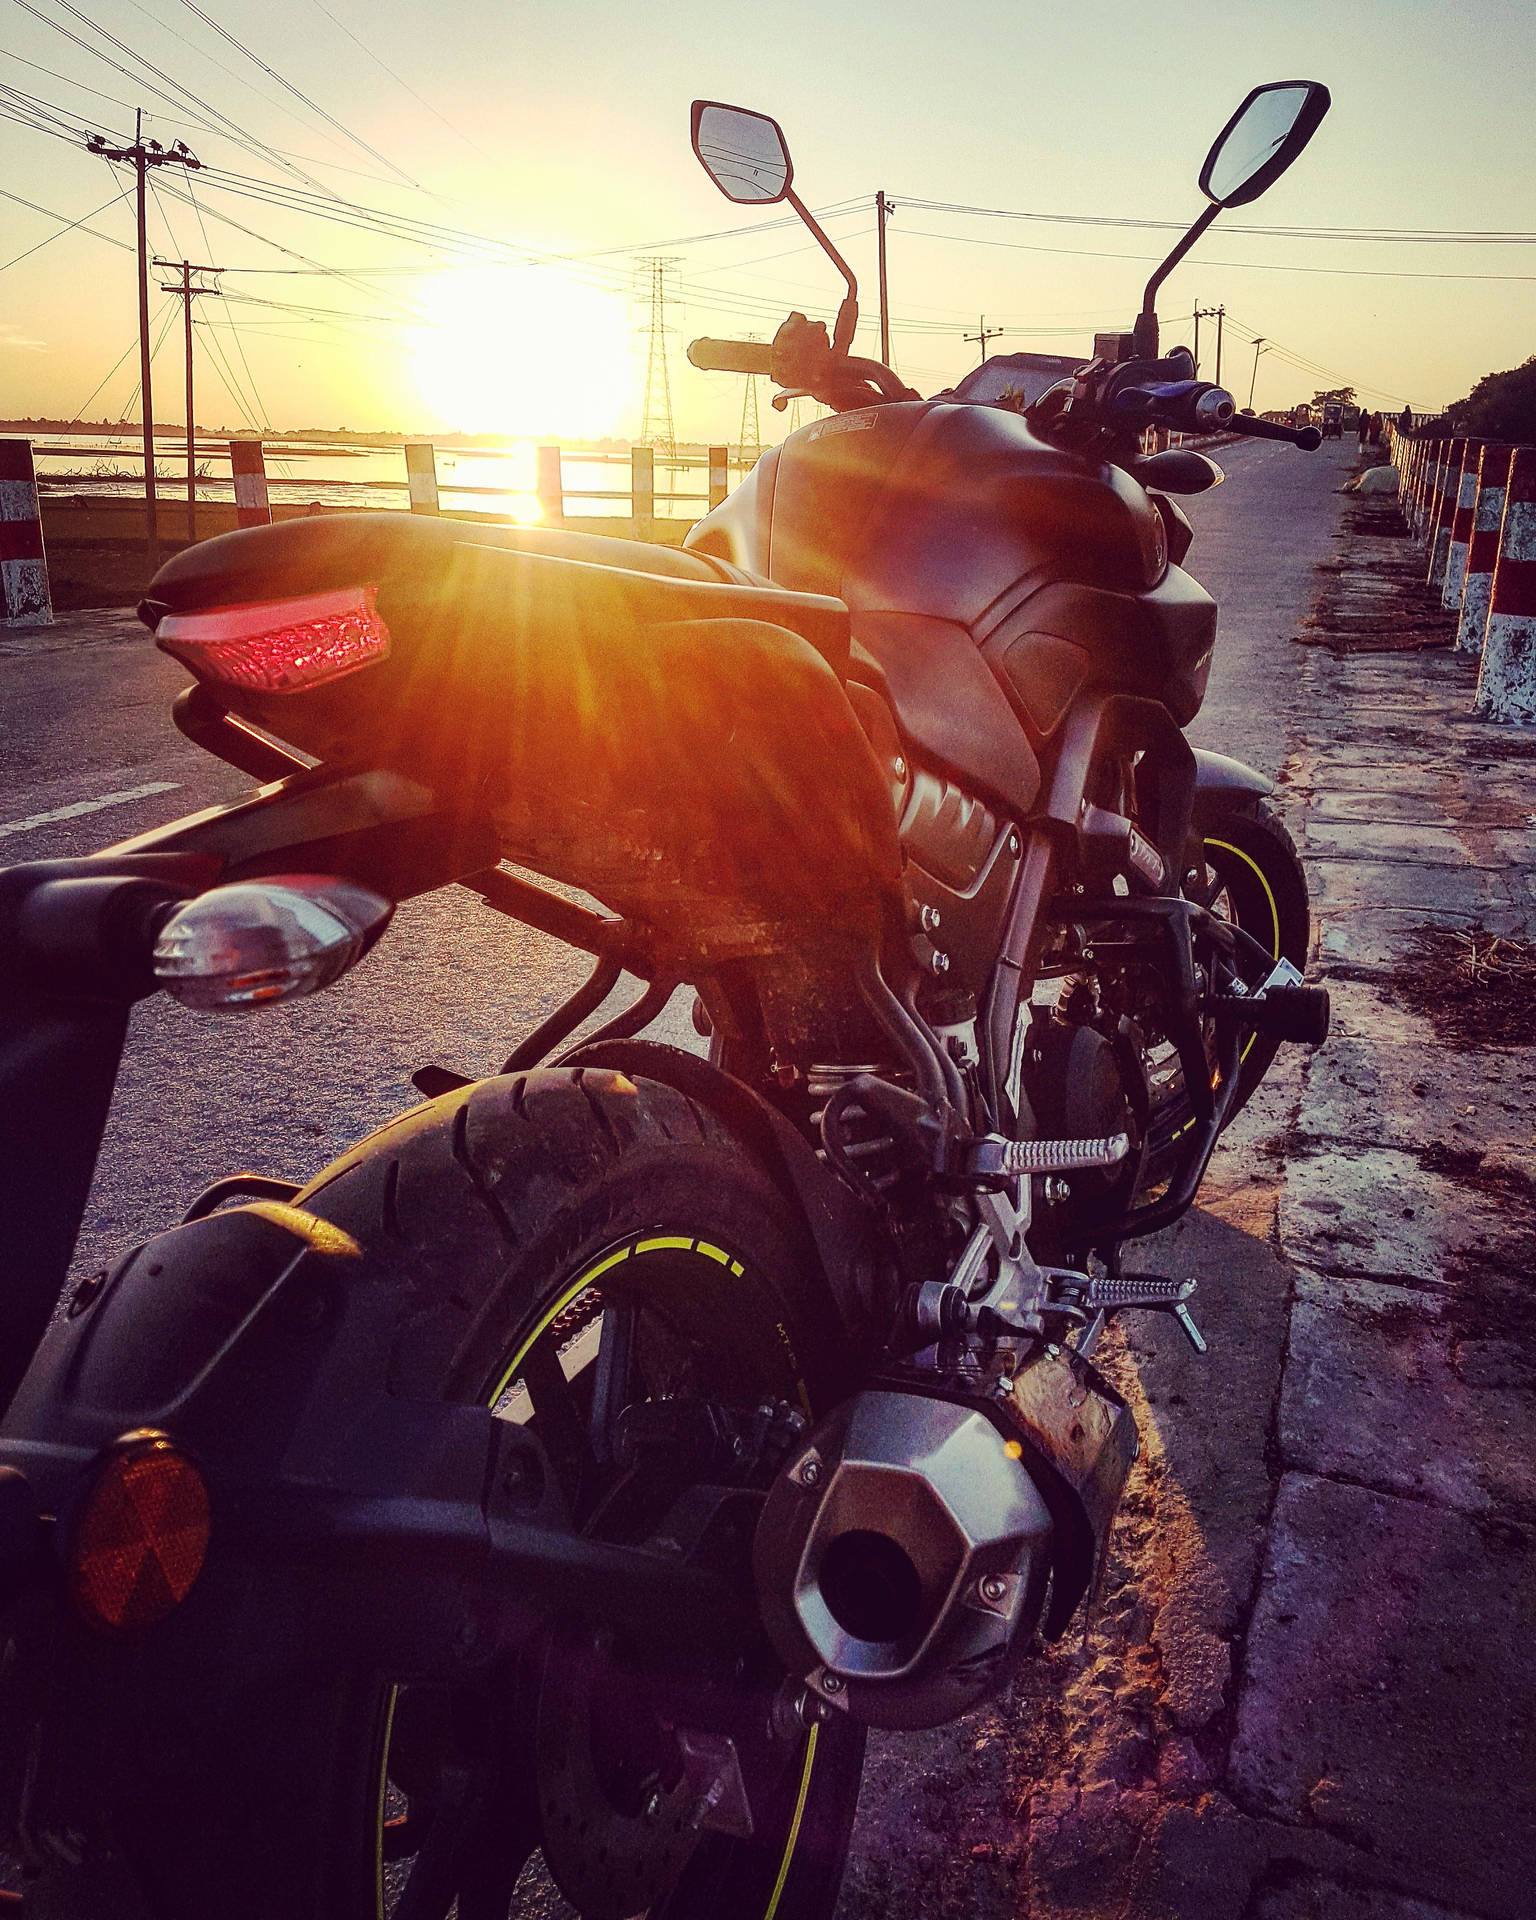 Black Yamaha Mt 15 Over Sunset